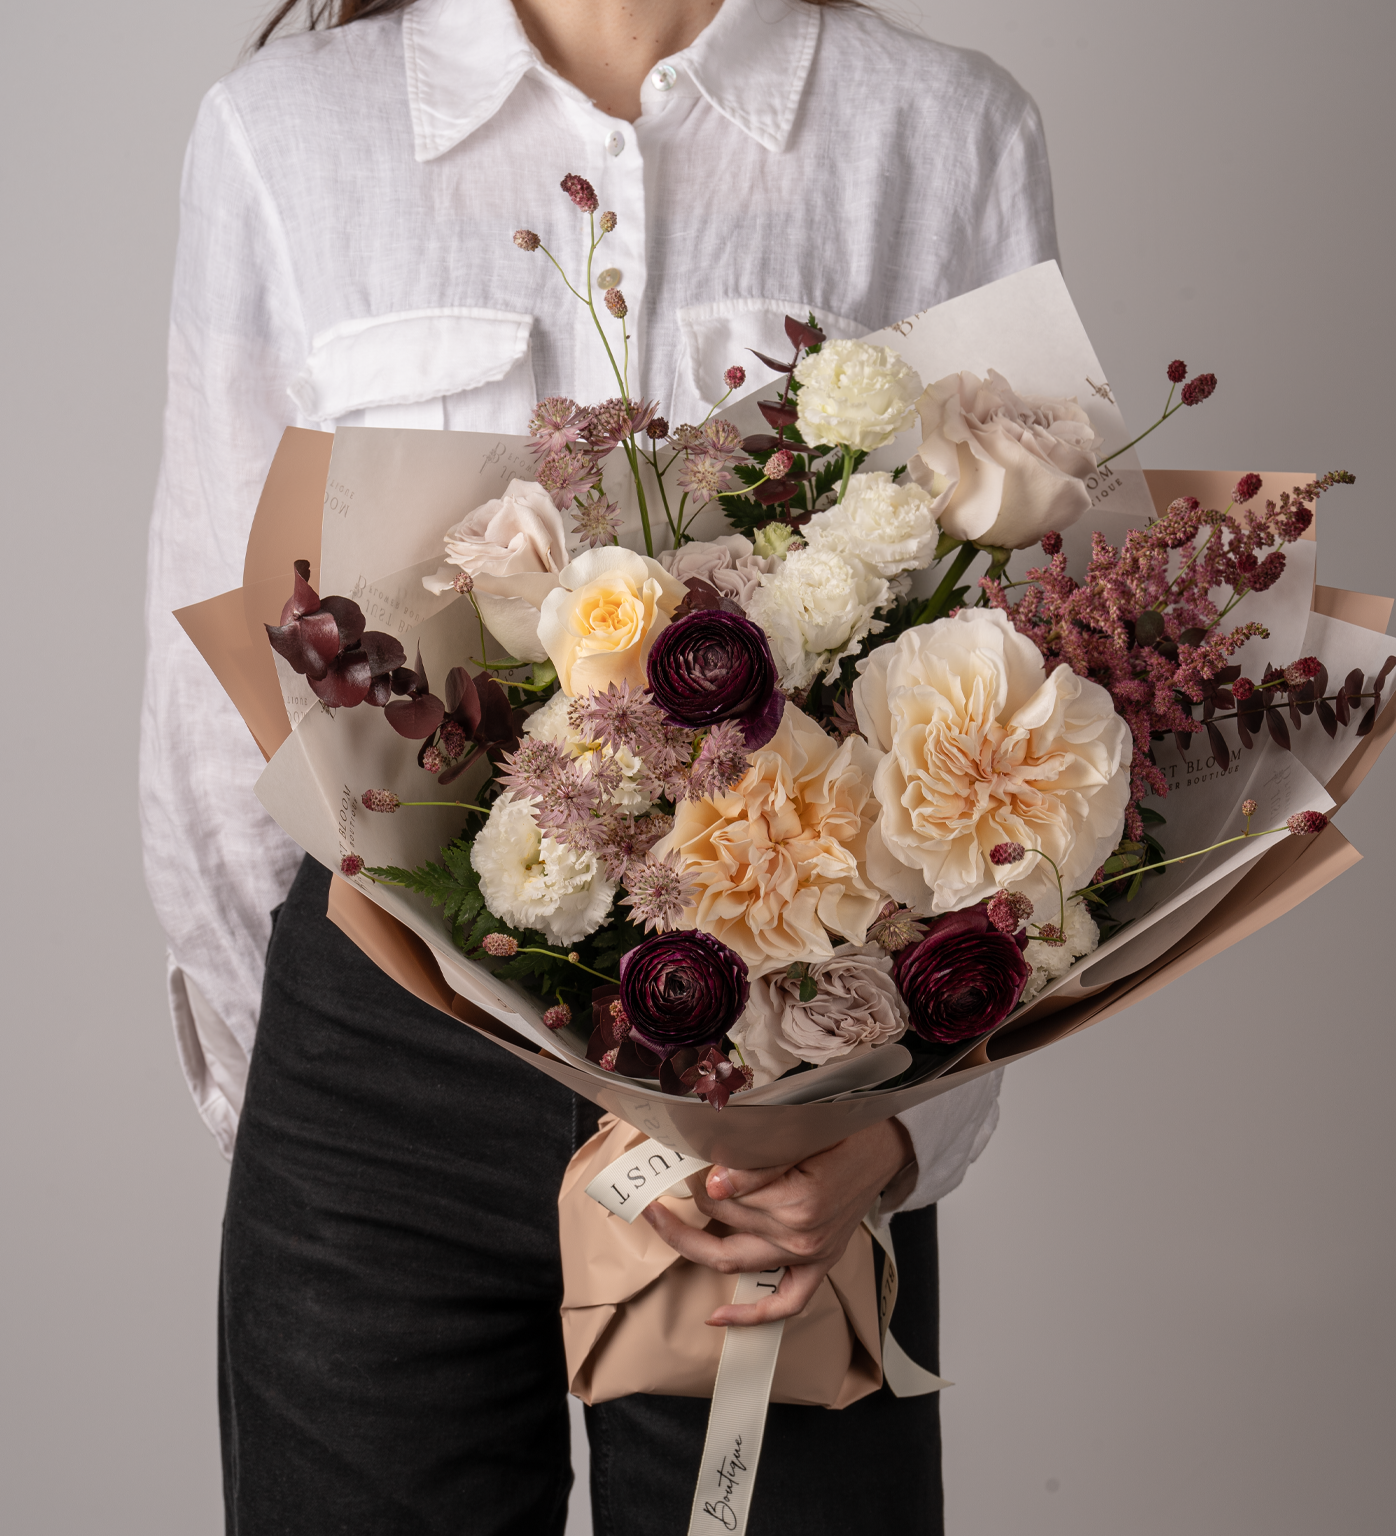 Just Bloom Stunning Earth Tone Bouquet - Premium Ecuadorian Roses and Exquisite Dutch Flowers